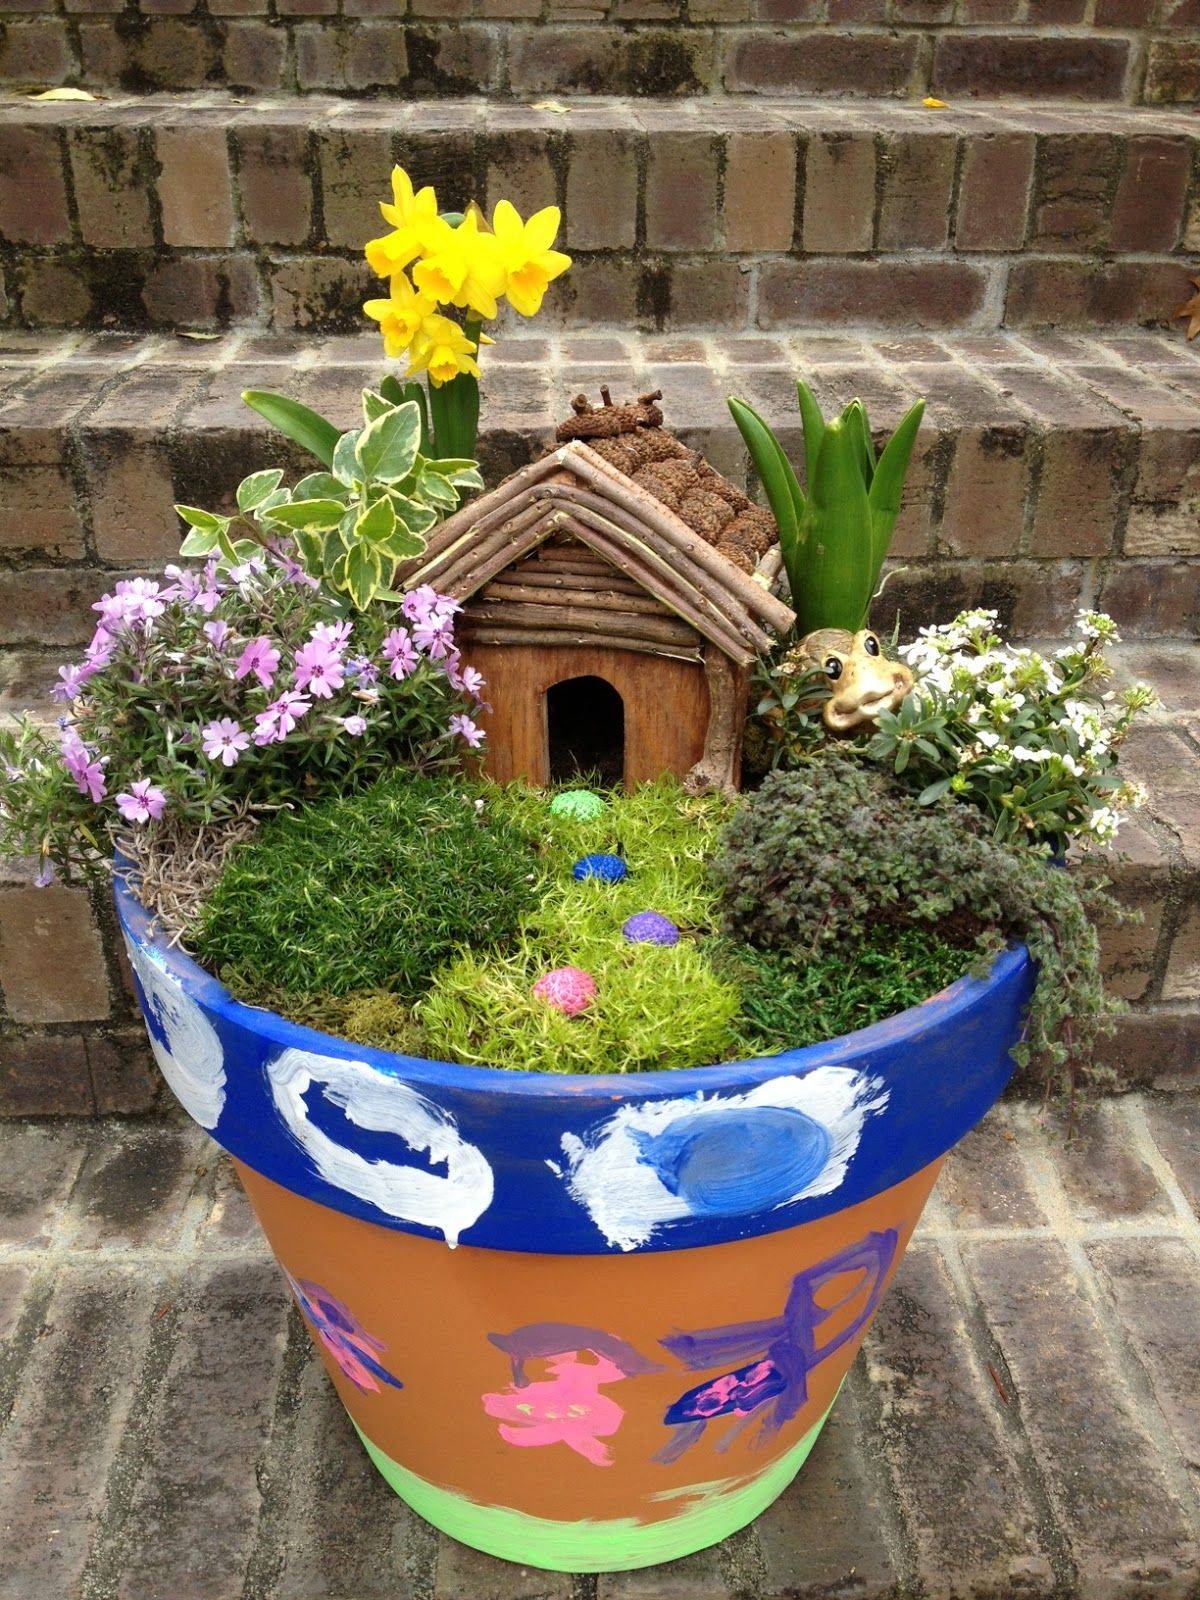 Amazing Backyard Fairy Garden Ideas